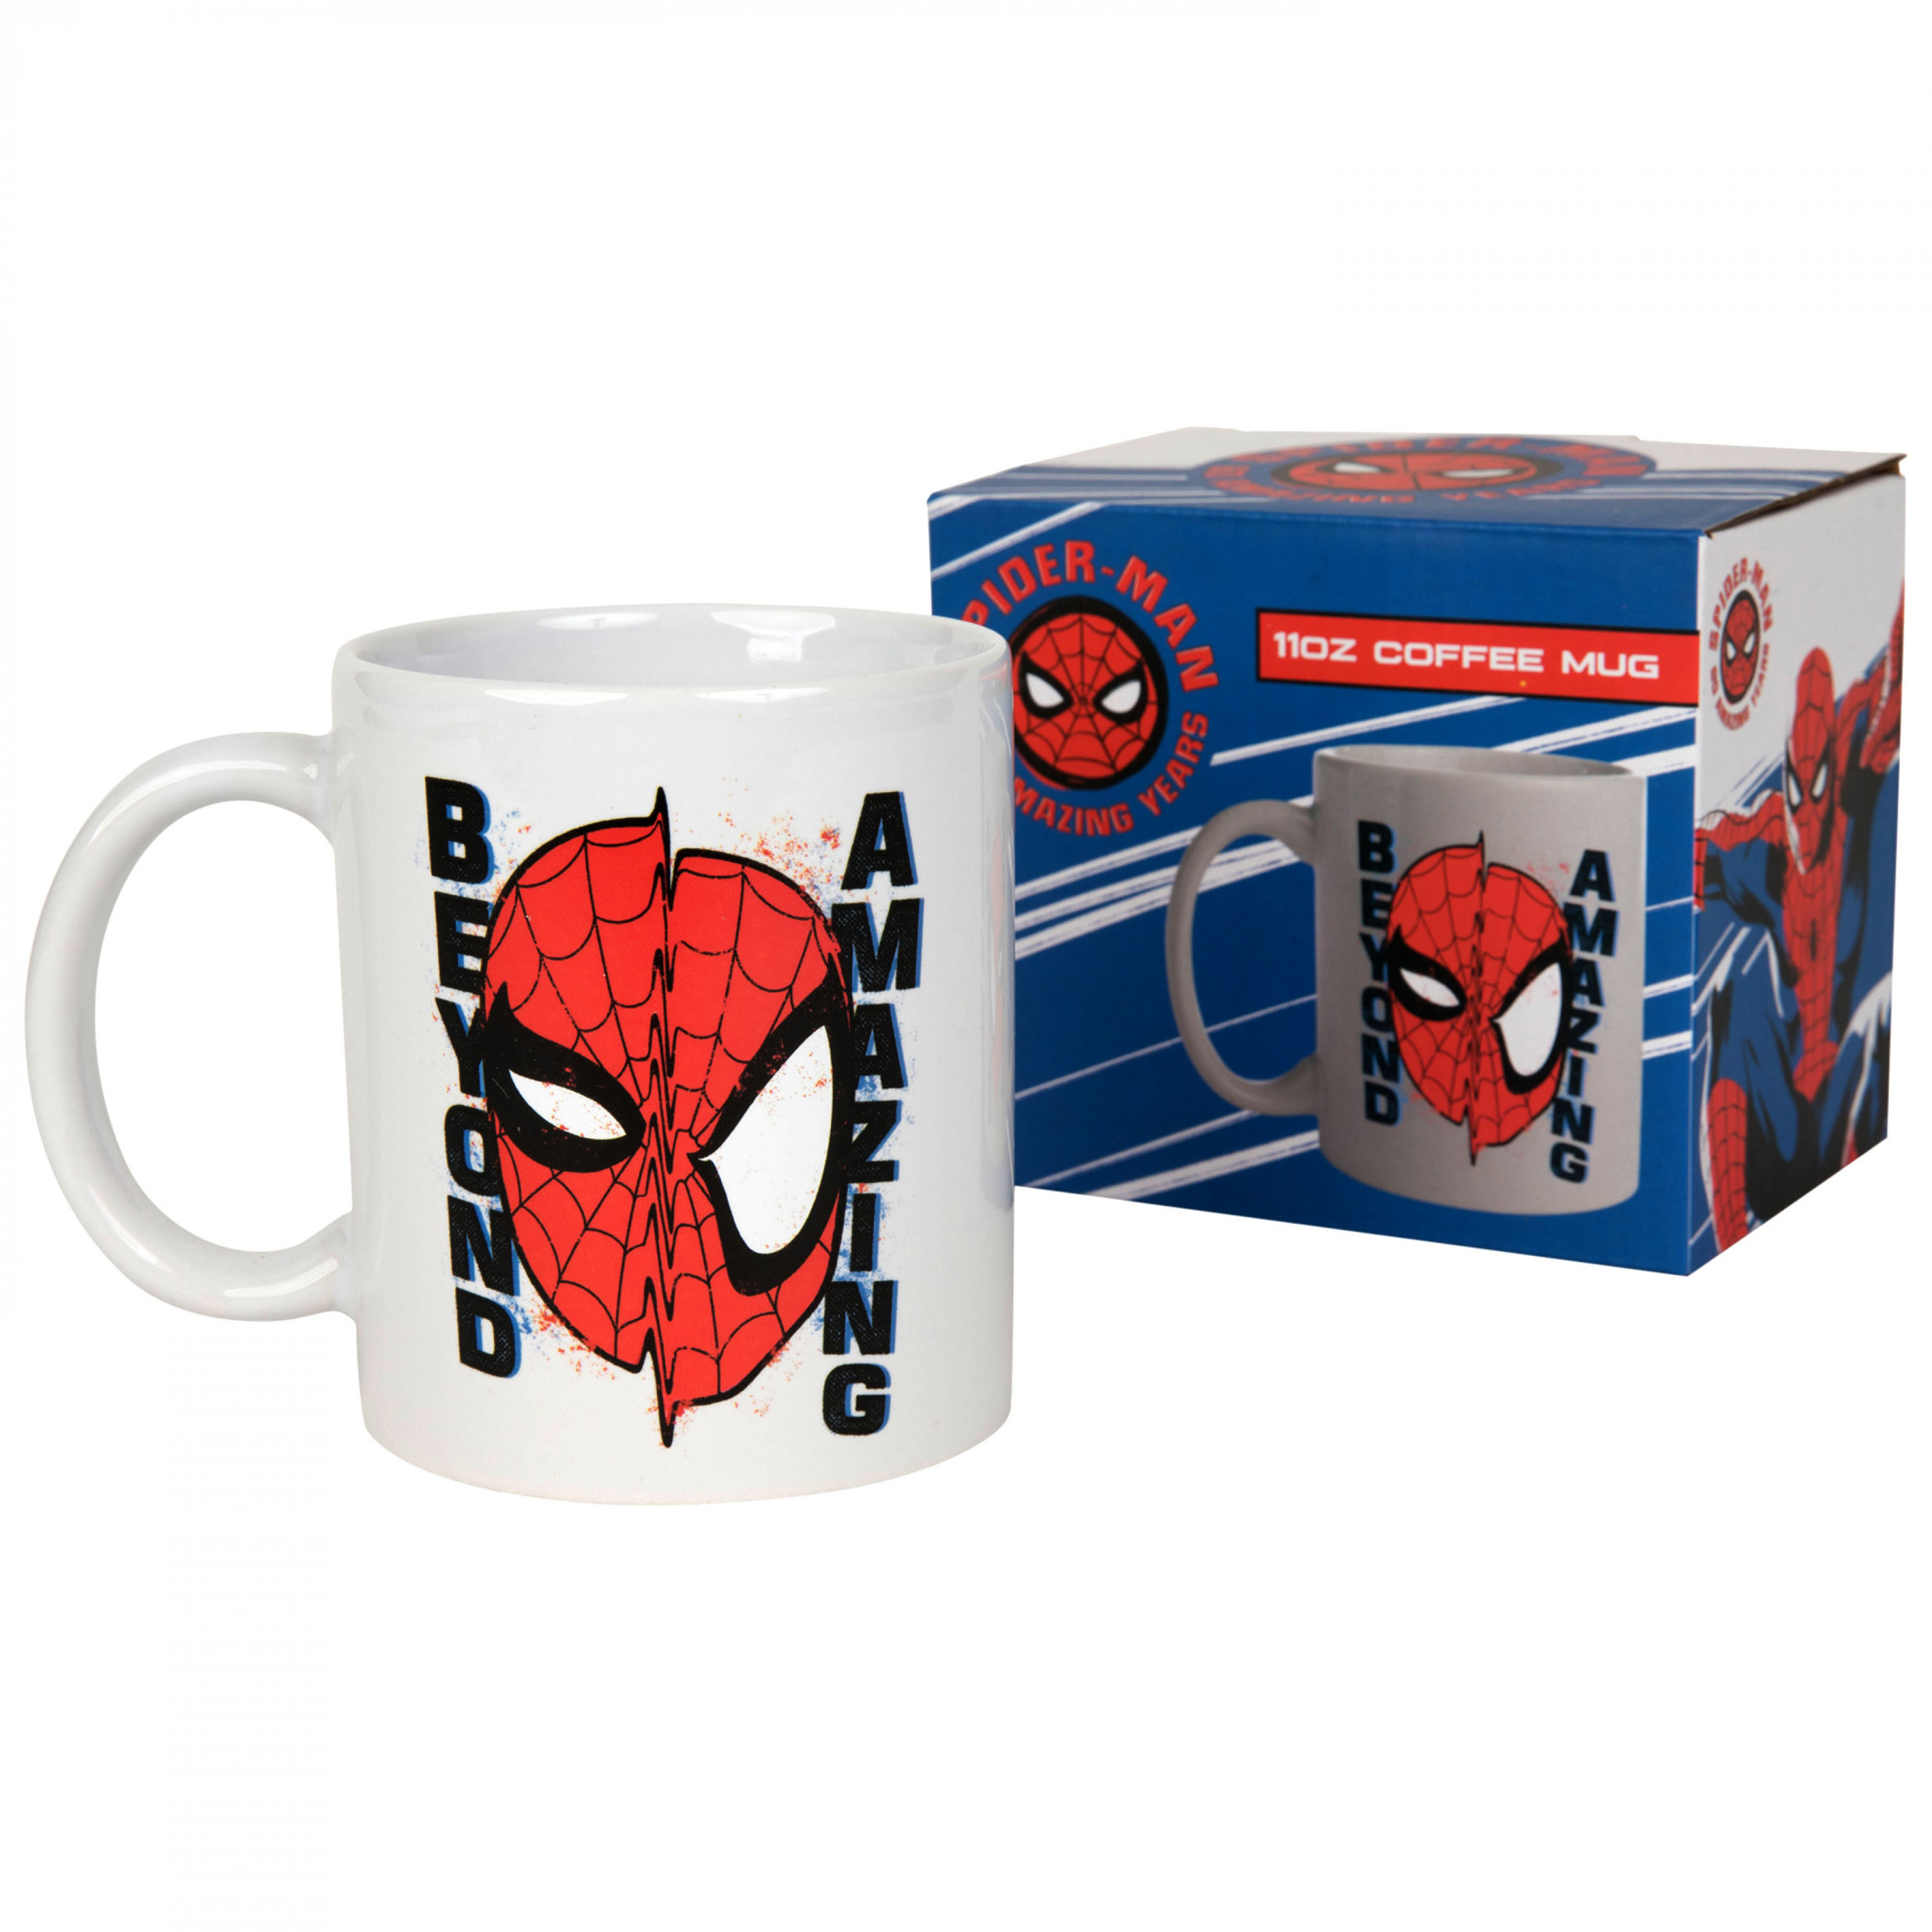 Spider-Man Beyond Amazing Two-Faced Mug